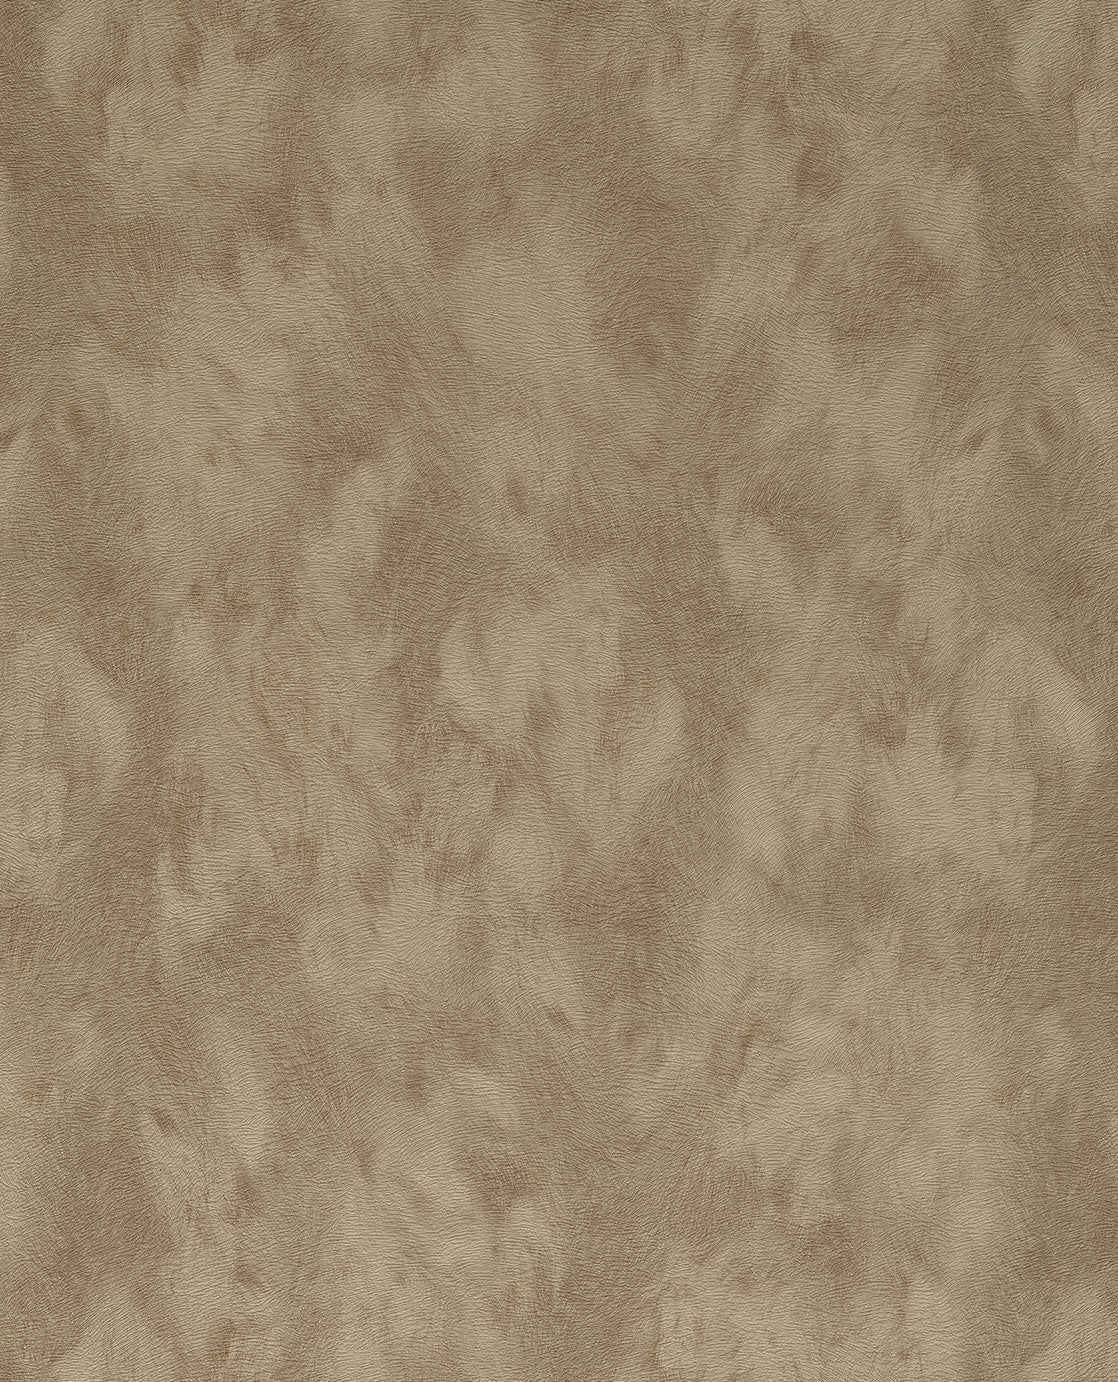 Skin Faux Fur Textured wallpaper